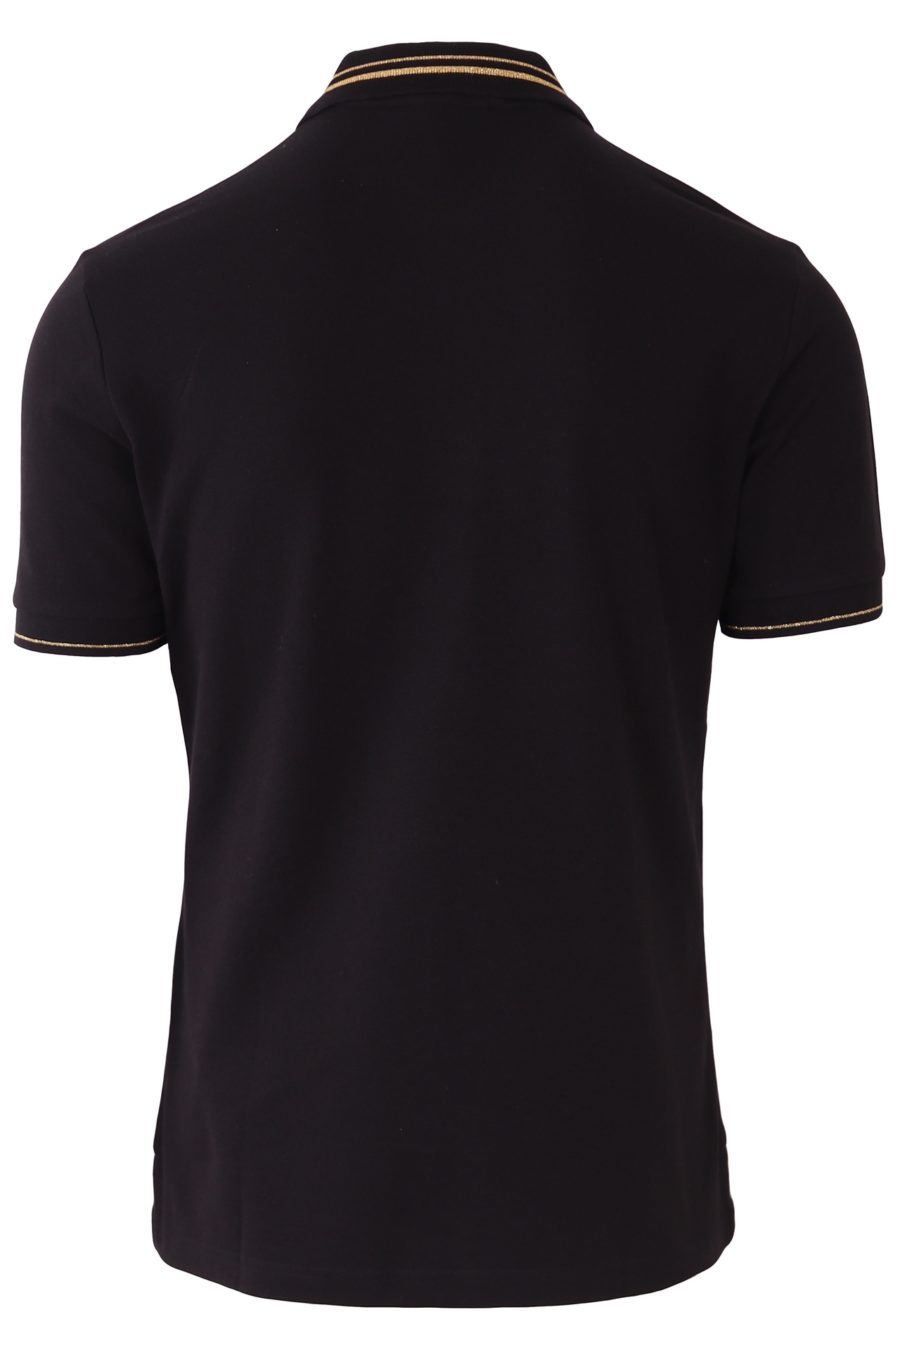 Poloshirt Versace Jeans Couture schwarz mit goldenem Logo - e187516b98810d0ebbb4693e70d48604357f9447